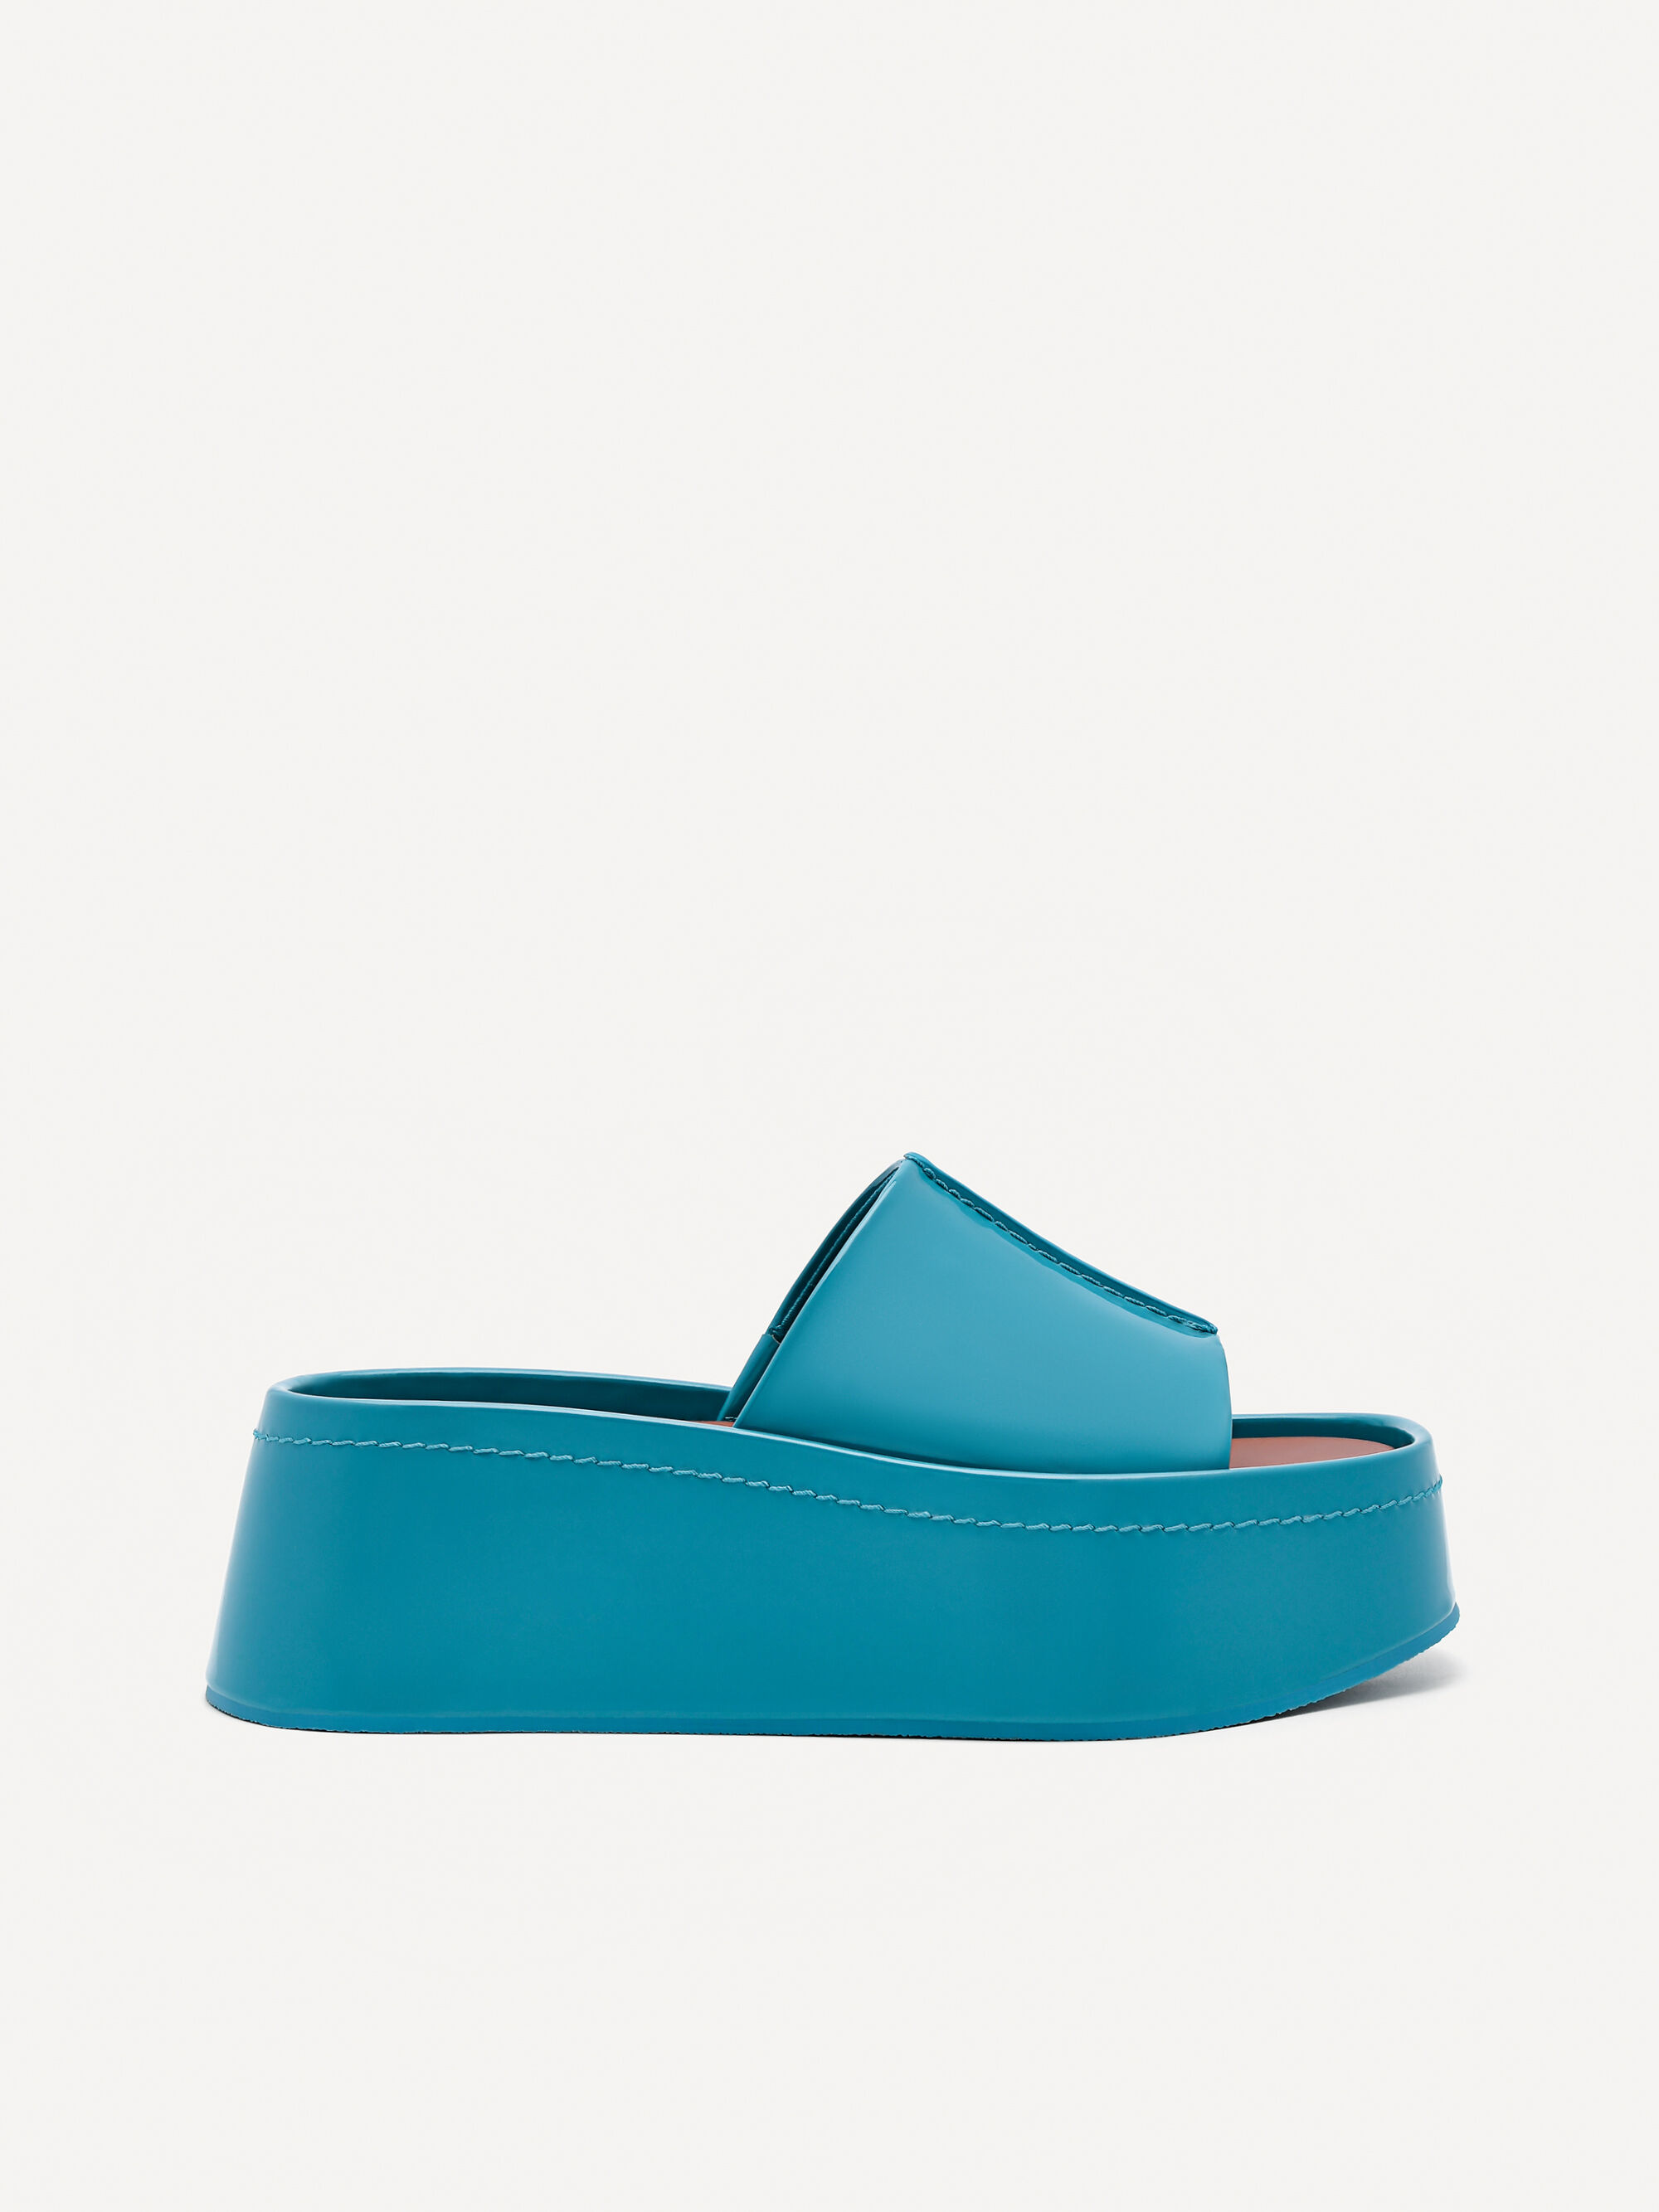 Turquoise Carmen Platform Sandals - PEDRO SG